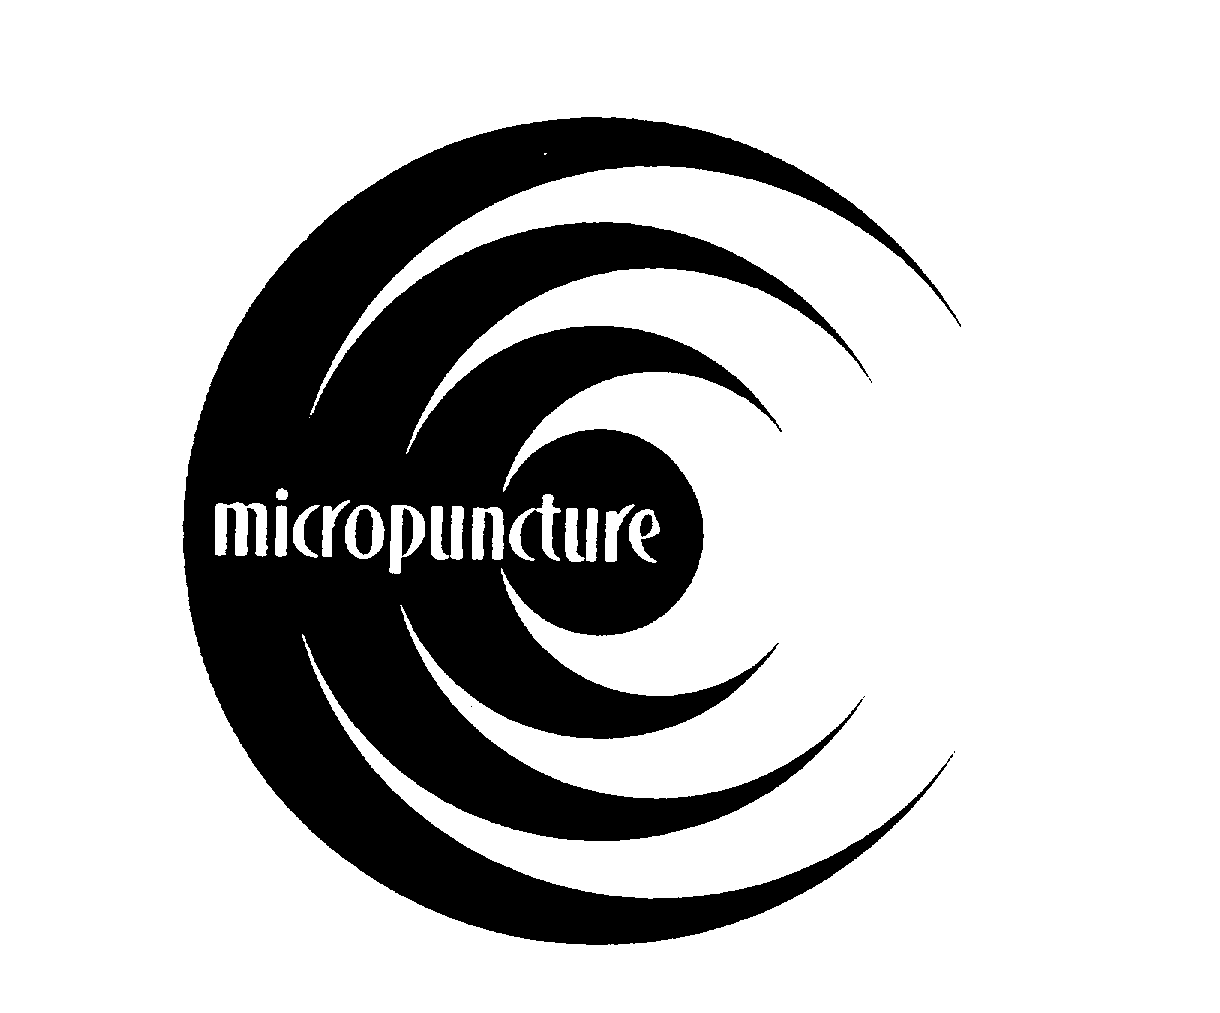  MICROPUNCTURE